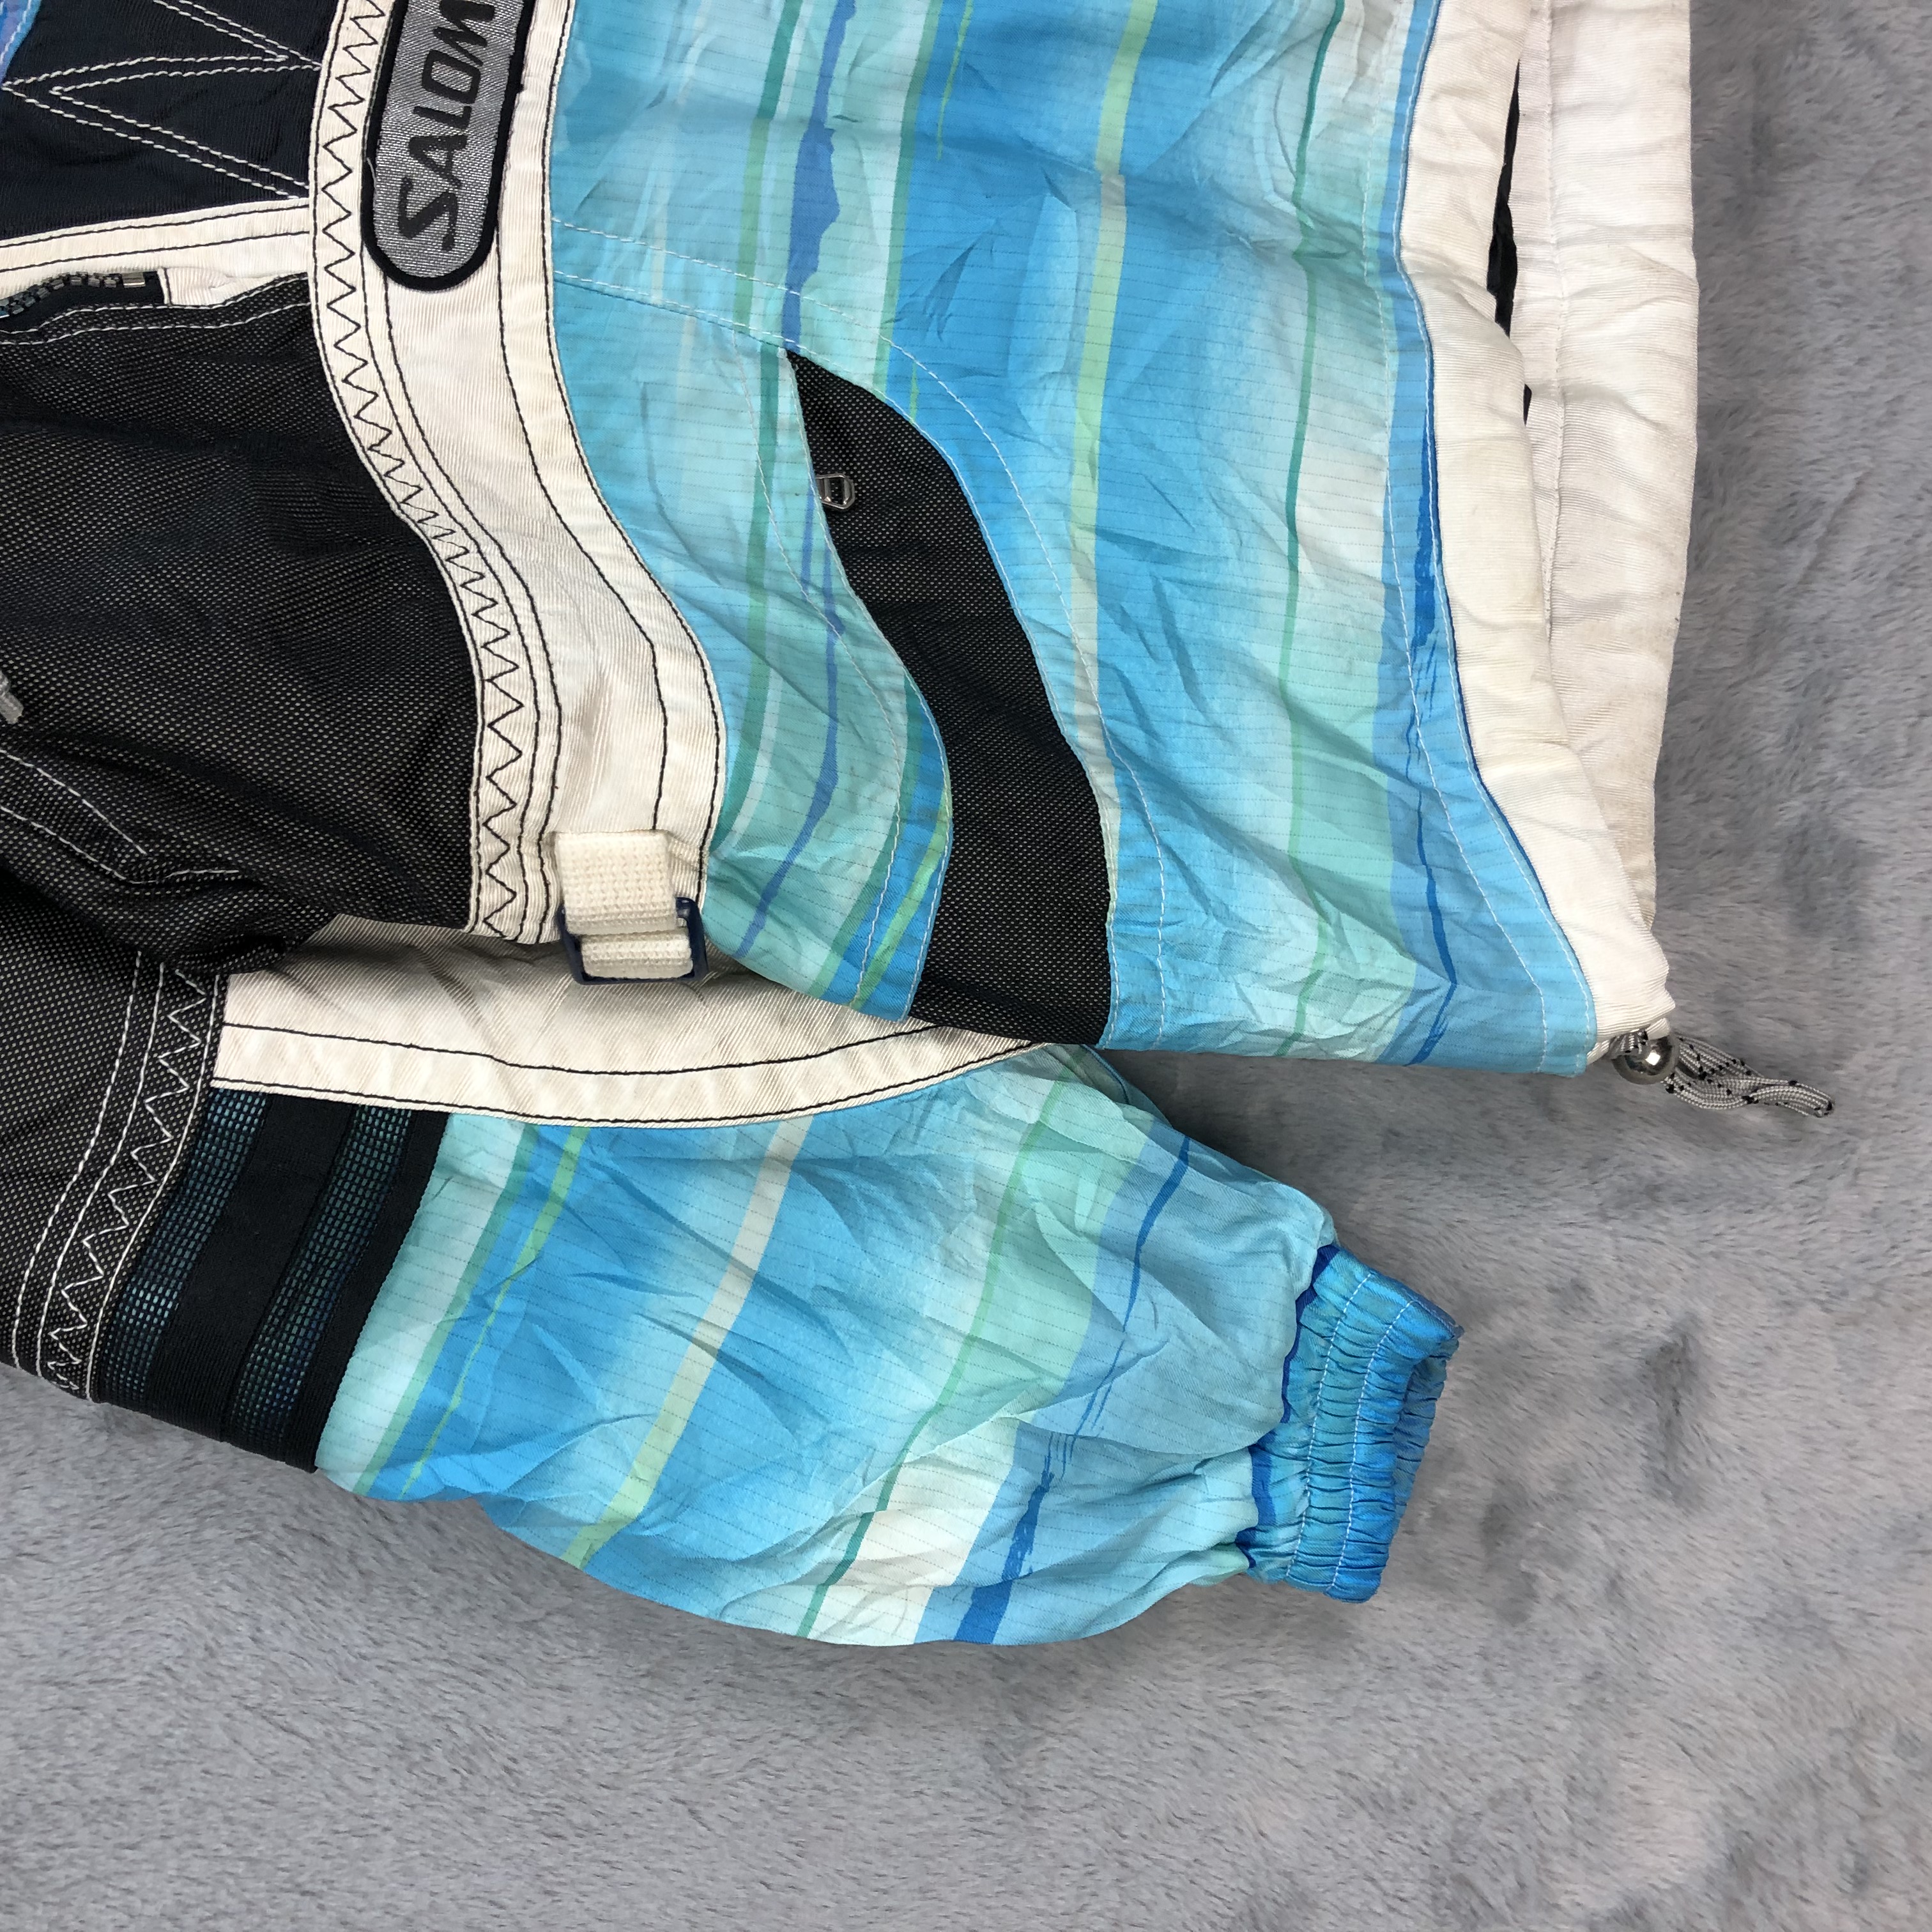 Salomon Optimal Movement Aqua Blue Ski Jacket #4748-167 - 6